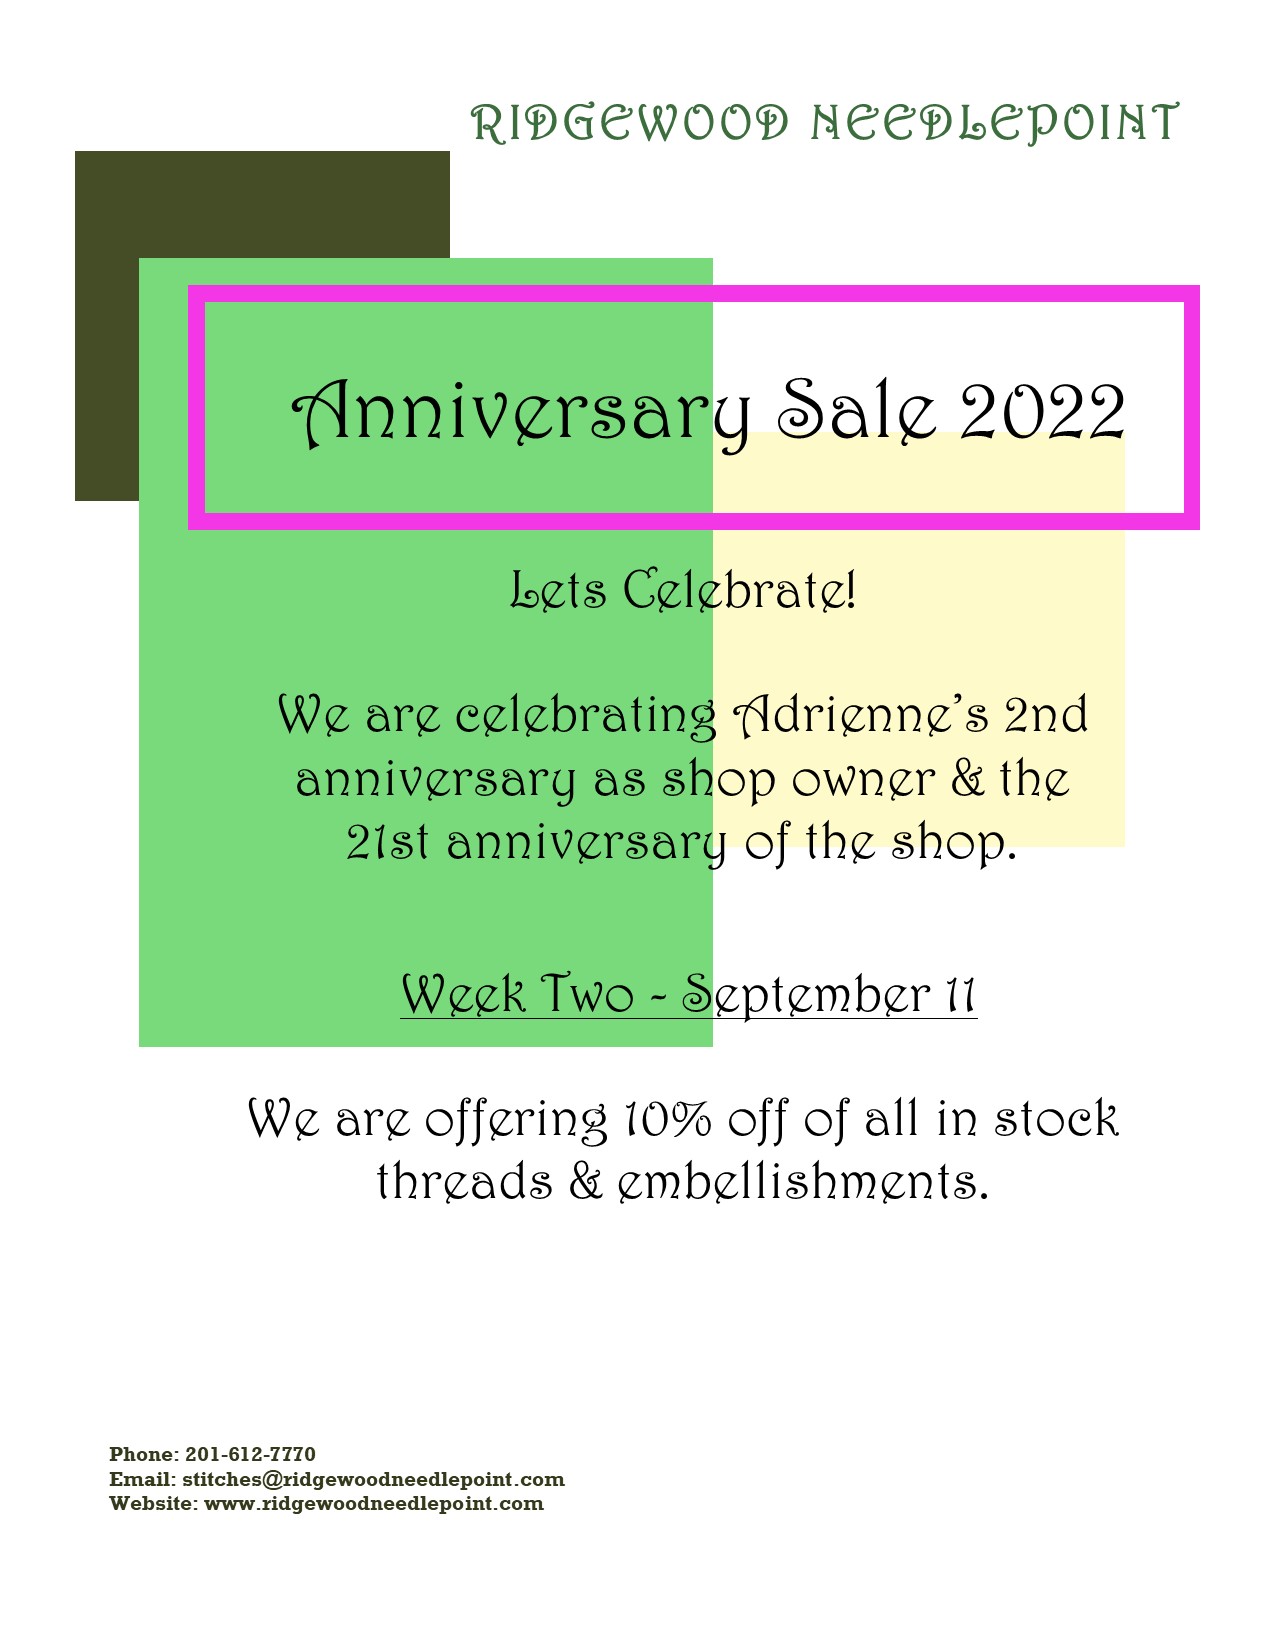 9-11-22 Anniversary Sale